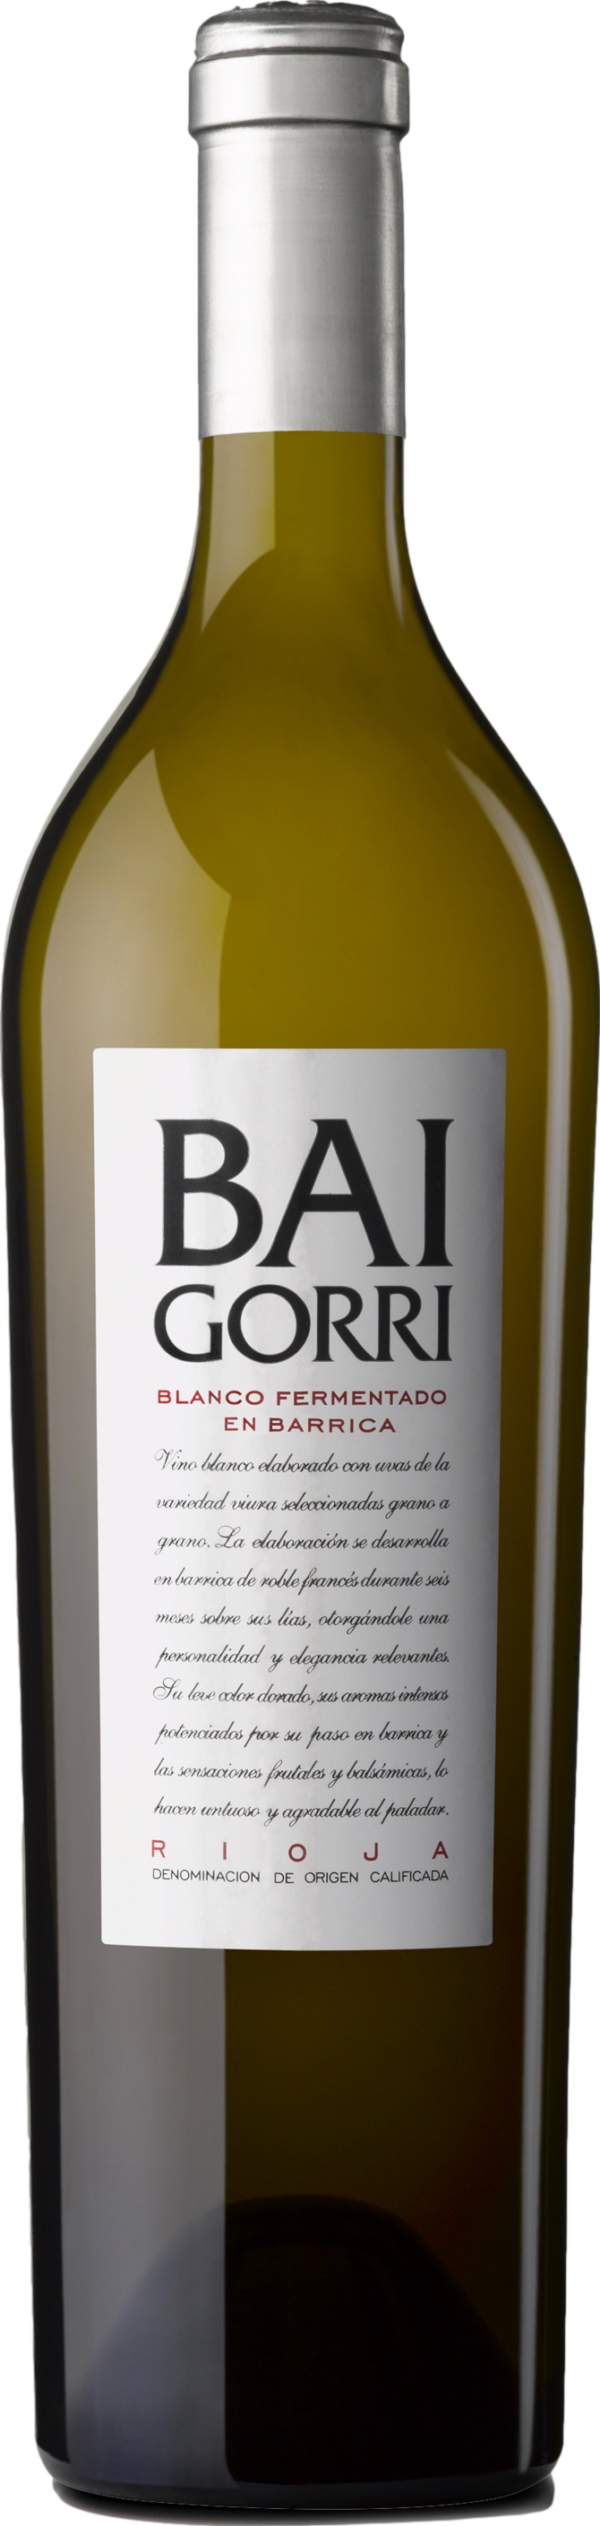 Product image of Baigorri Fermentado en Barrica Blanco 2018 from 8wines